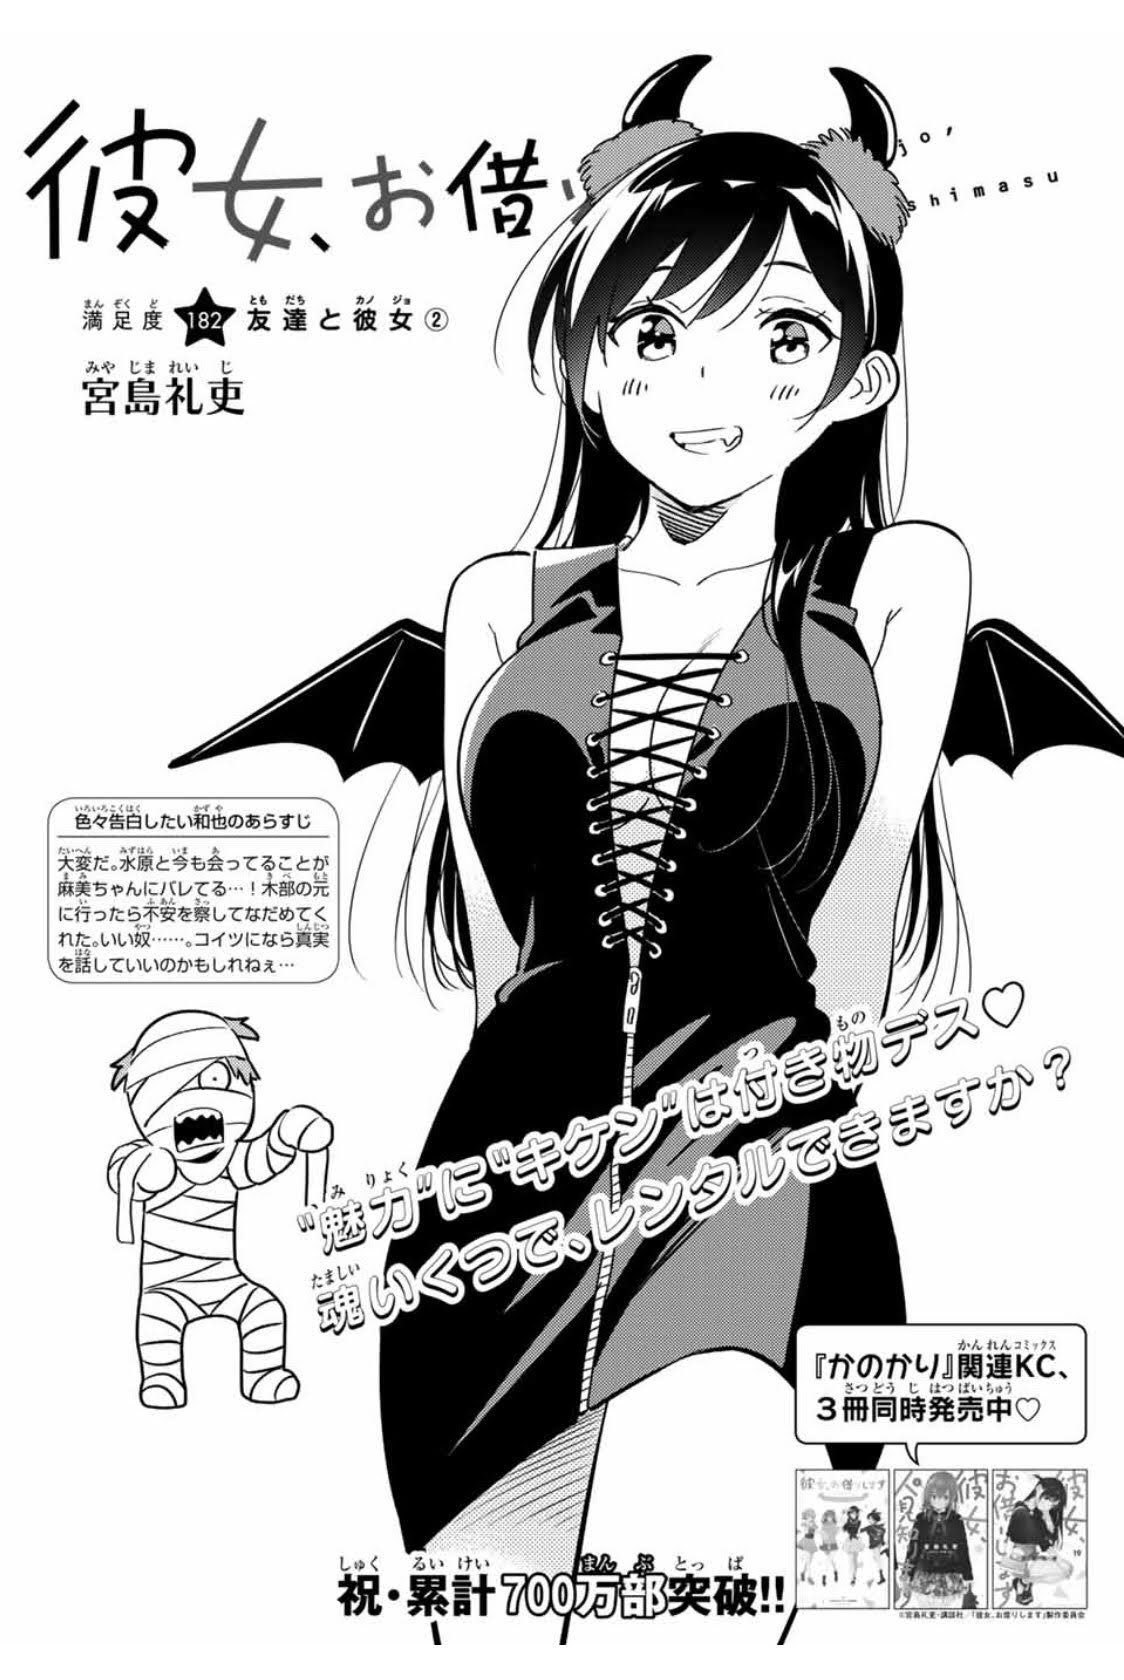 Manga Mogura RE on X: Kanojo mo Kanojo (Girlfriend, Girlfriend) by  Hiroyuki has 1.6 million copies in circulation for vols 1-12 English  release @KodanshaManga French release @noevegrafx   / X